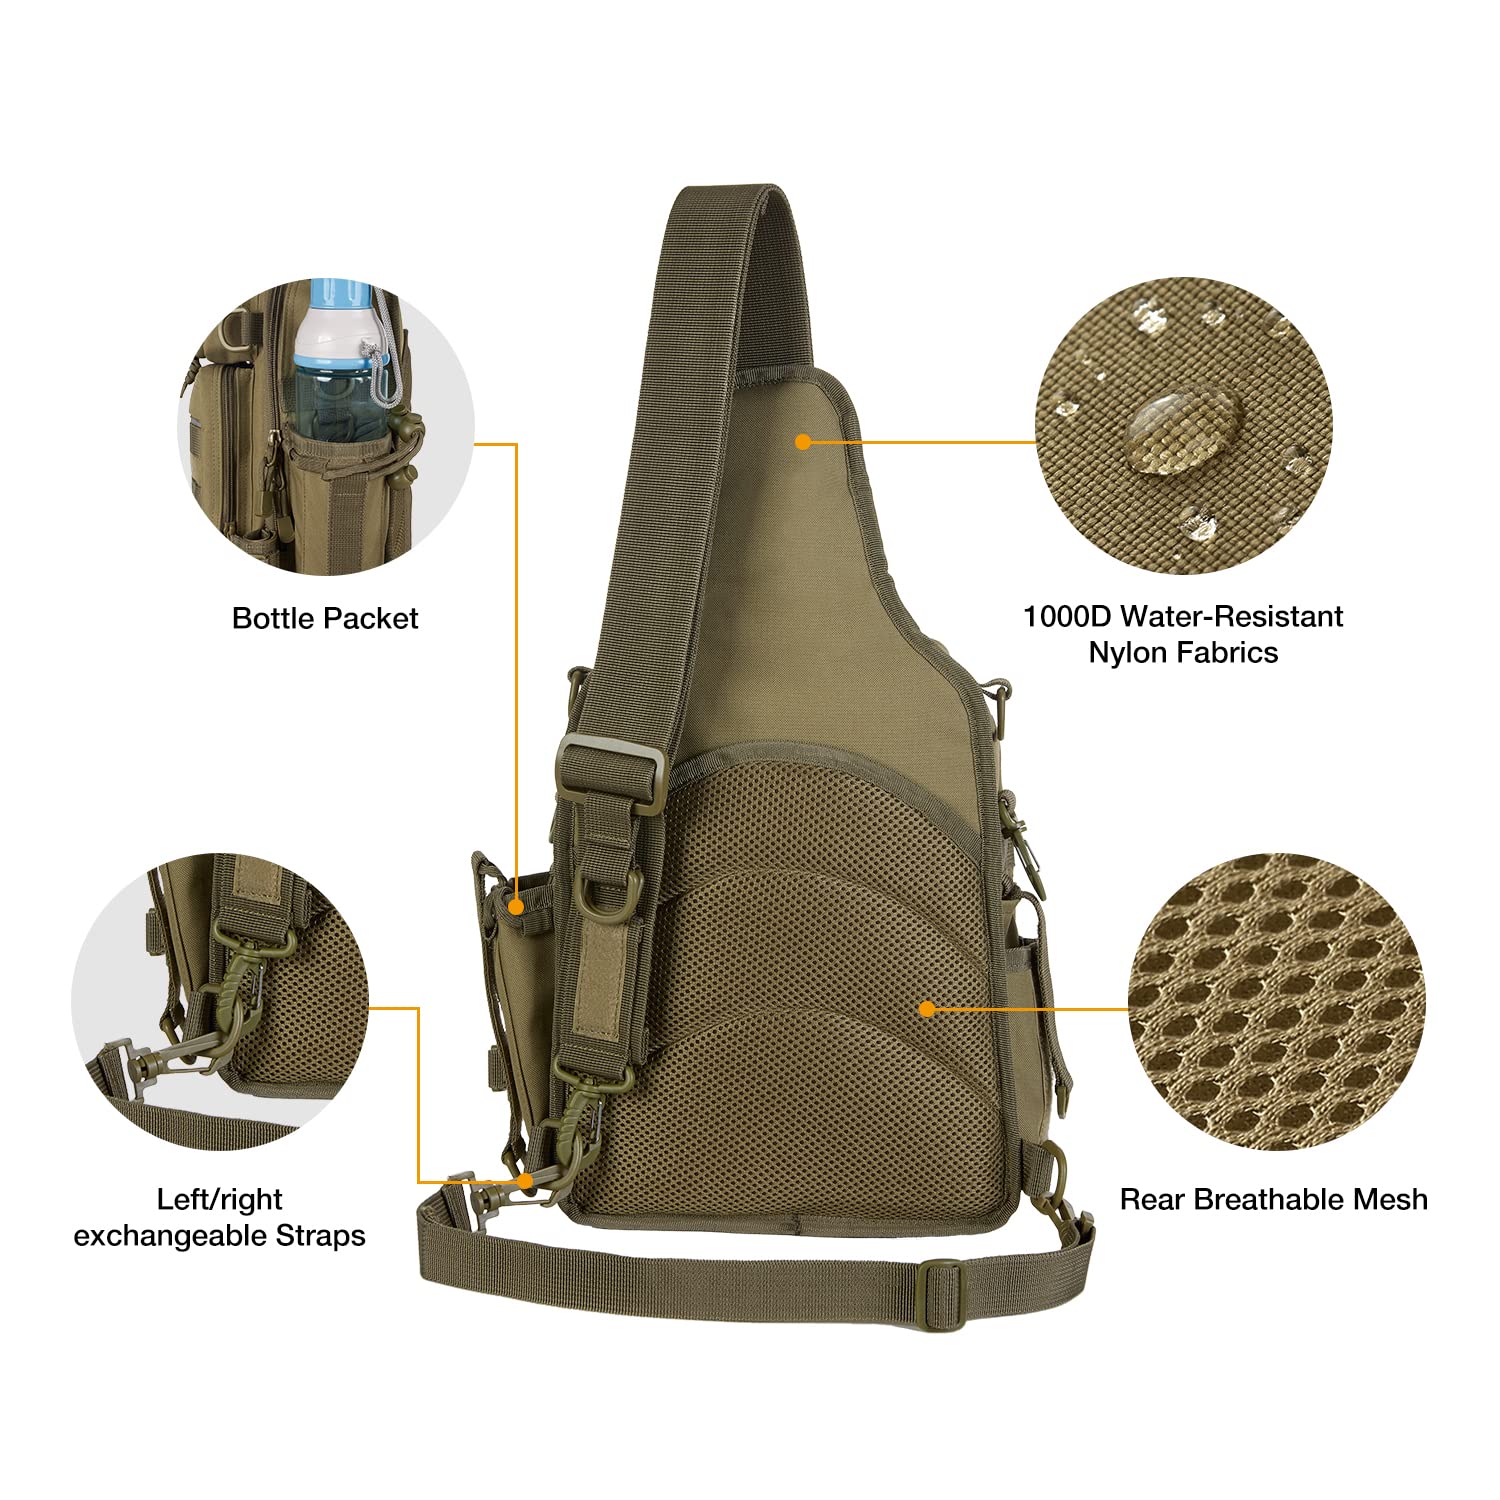 Fishing Apparel: Vests & Tackle Backpacks